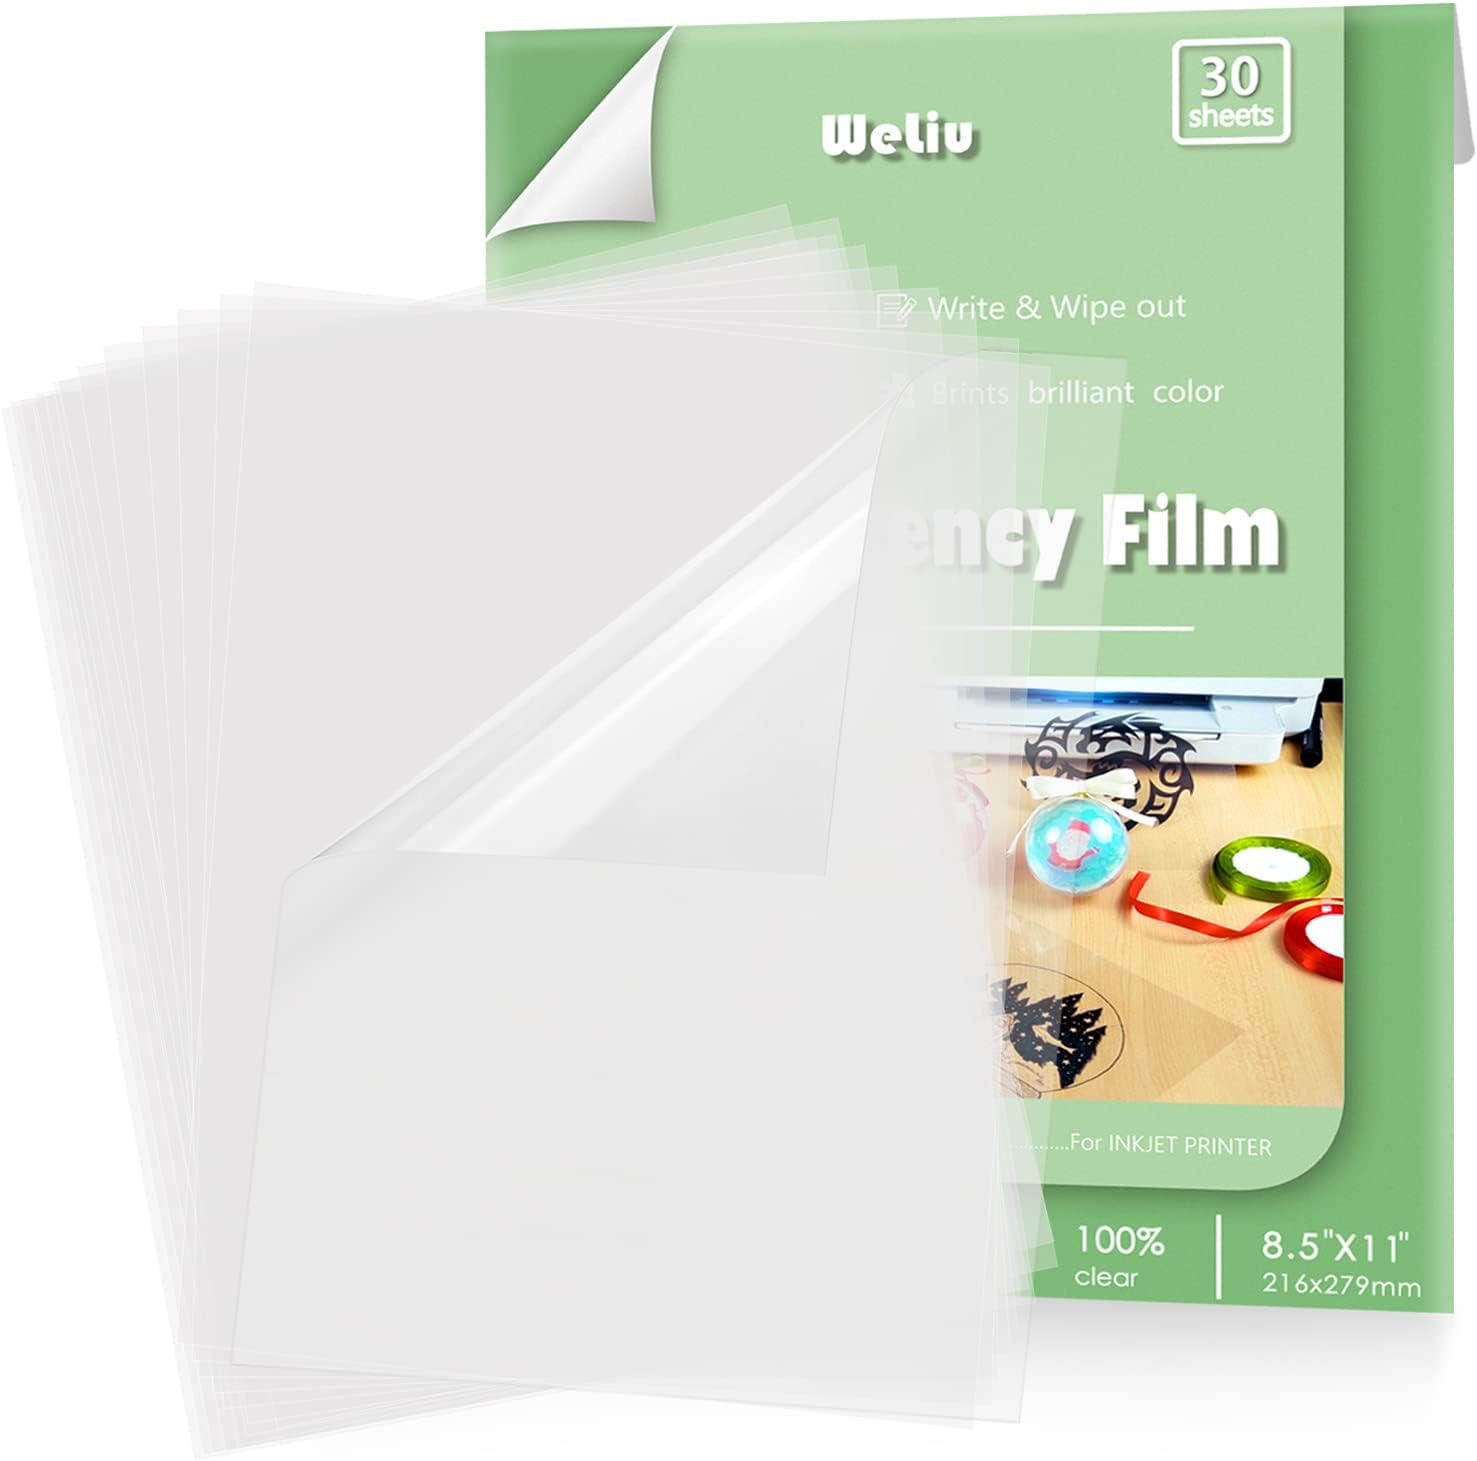 Transparency Film for Inkjet Printers 30 Sheets [...]